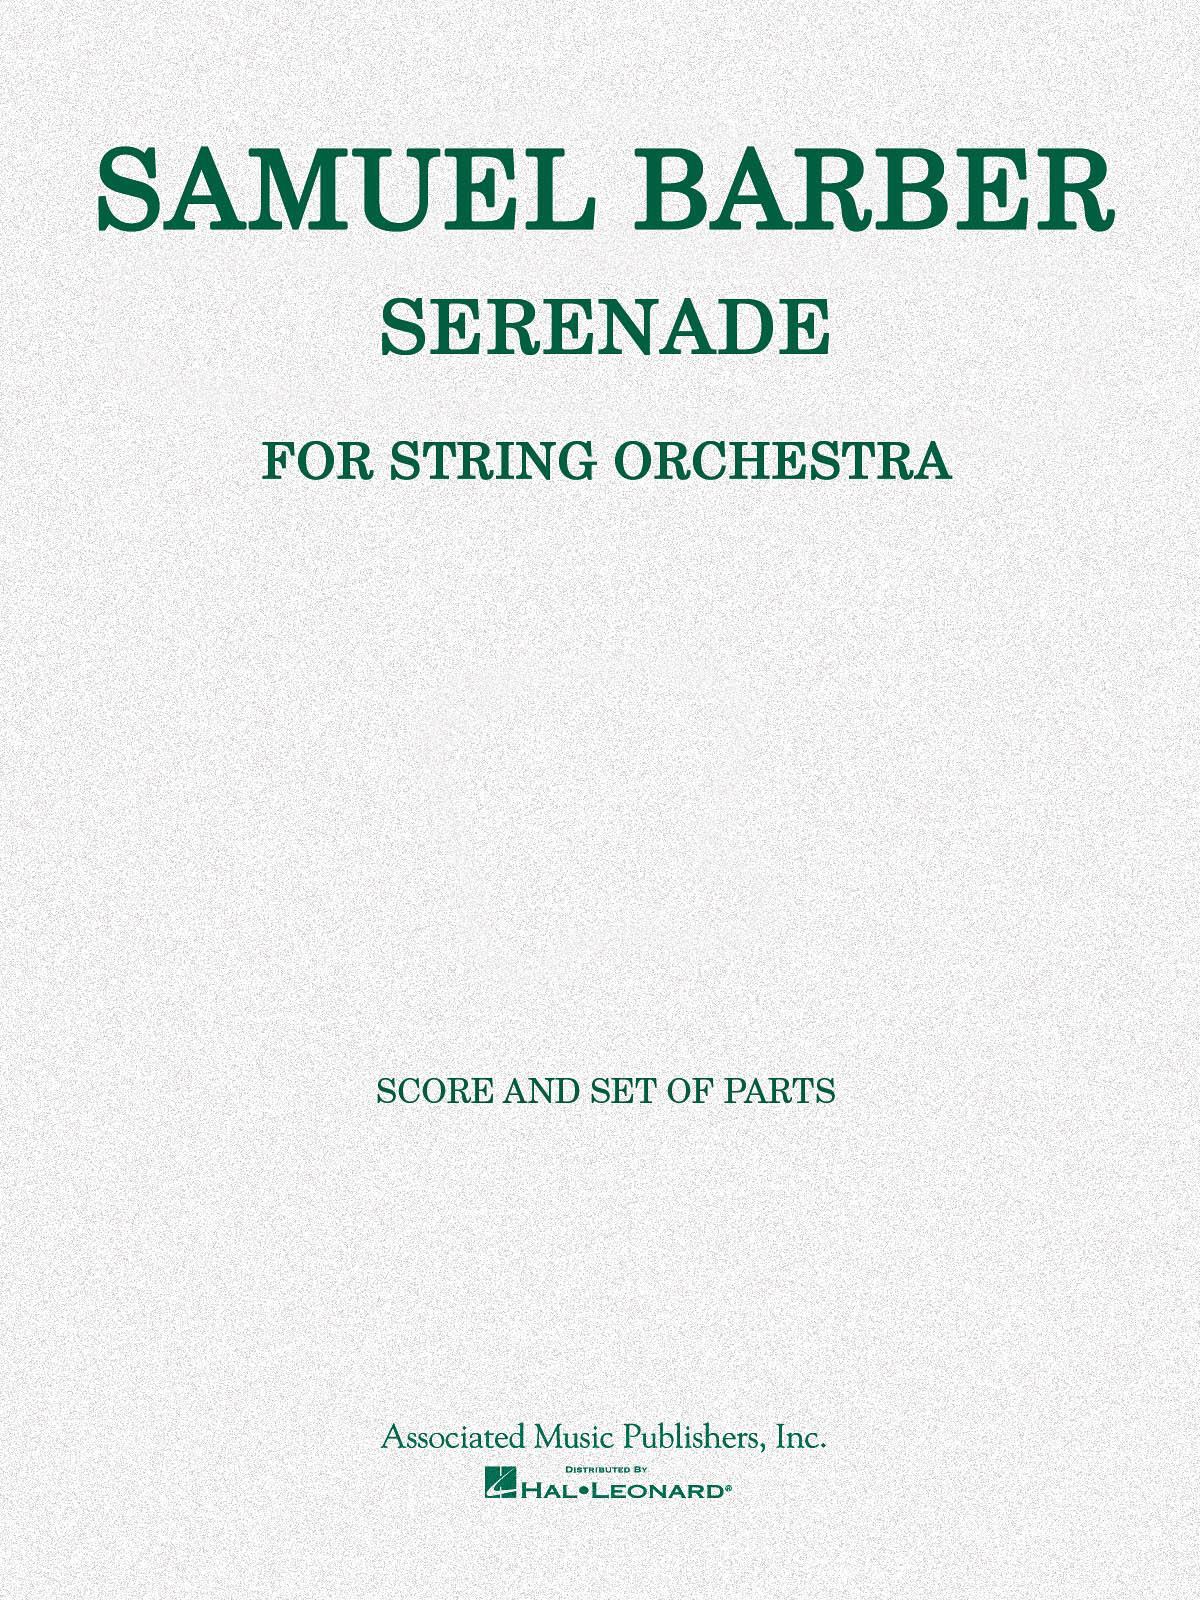 Samuel Barber: Serenade For Strings - String Orchestra Score/Parts 8-8-4-4-4